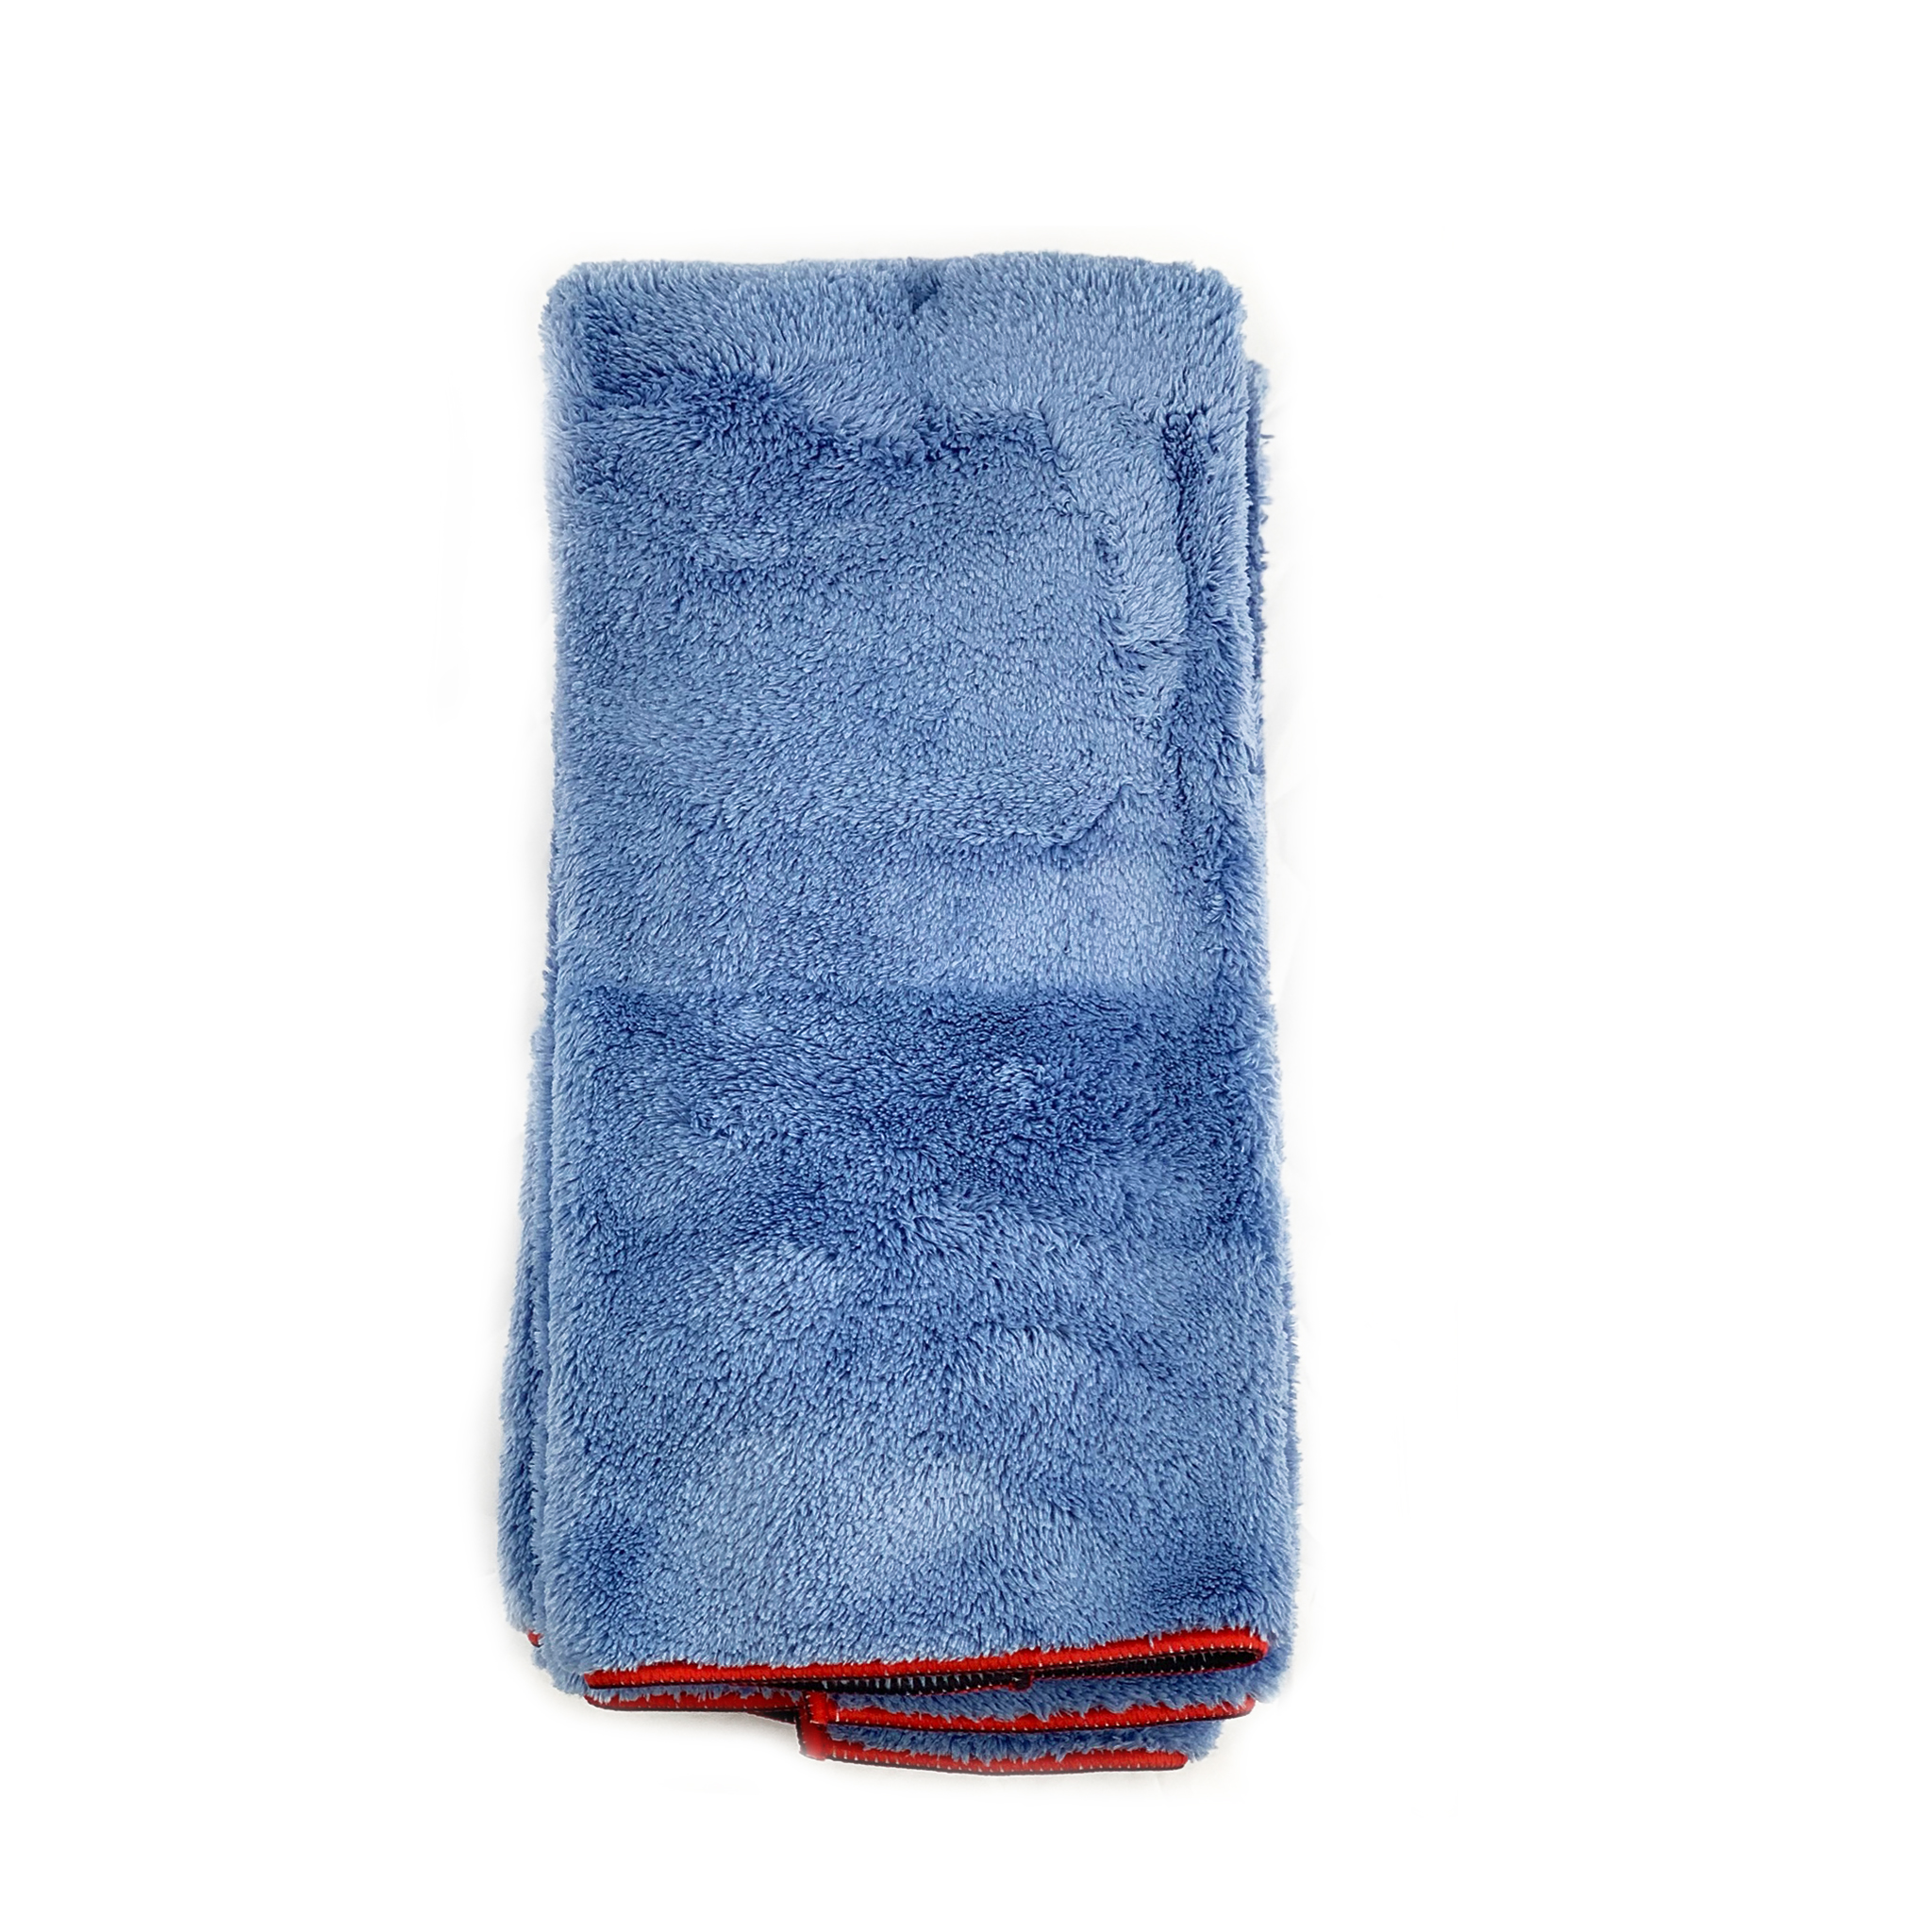 Super Absorbent Microfiber Towel – Best Car Cleaning Supplies